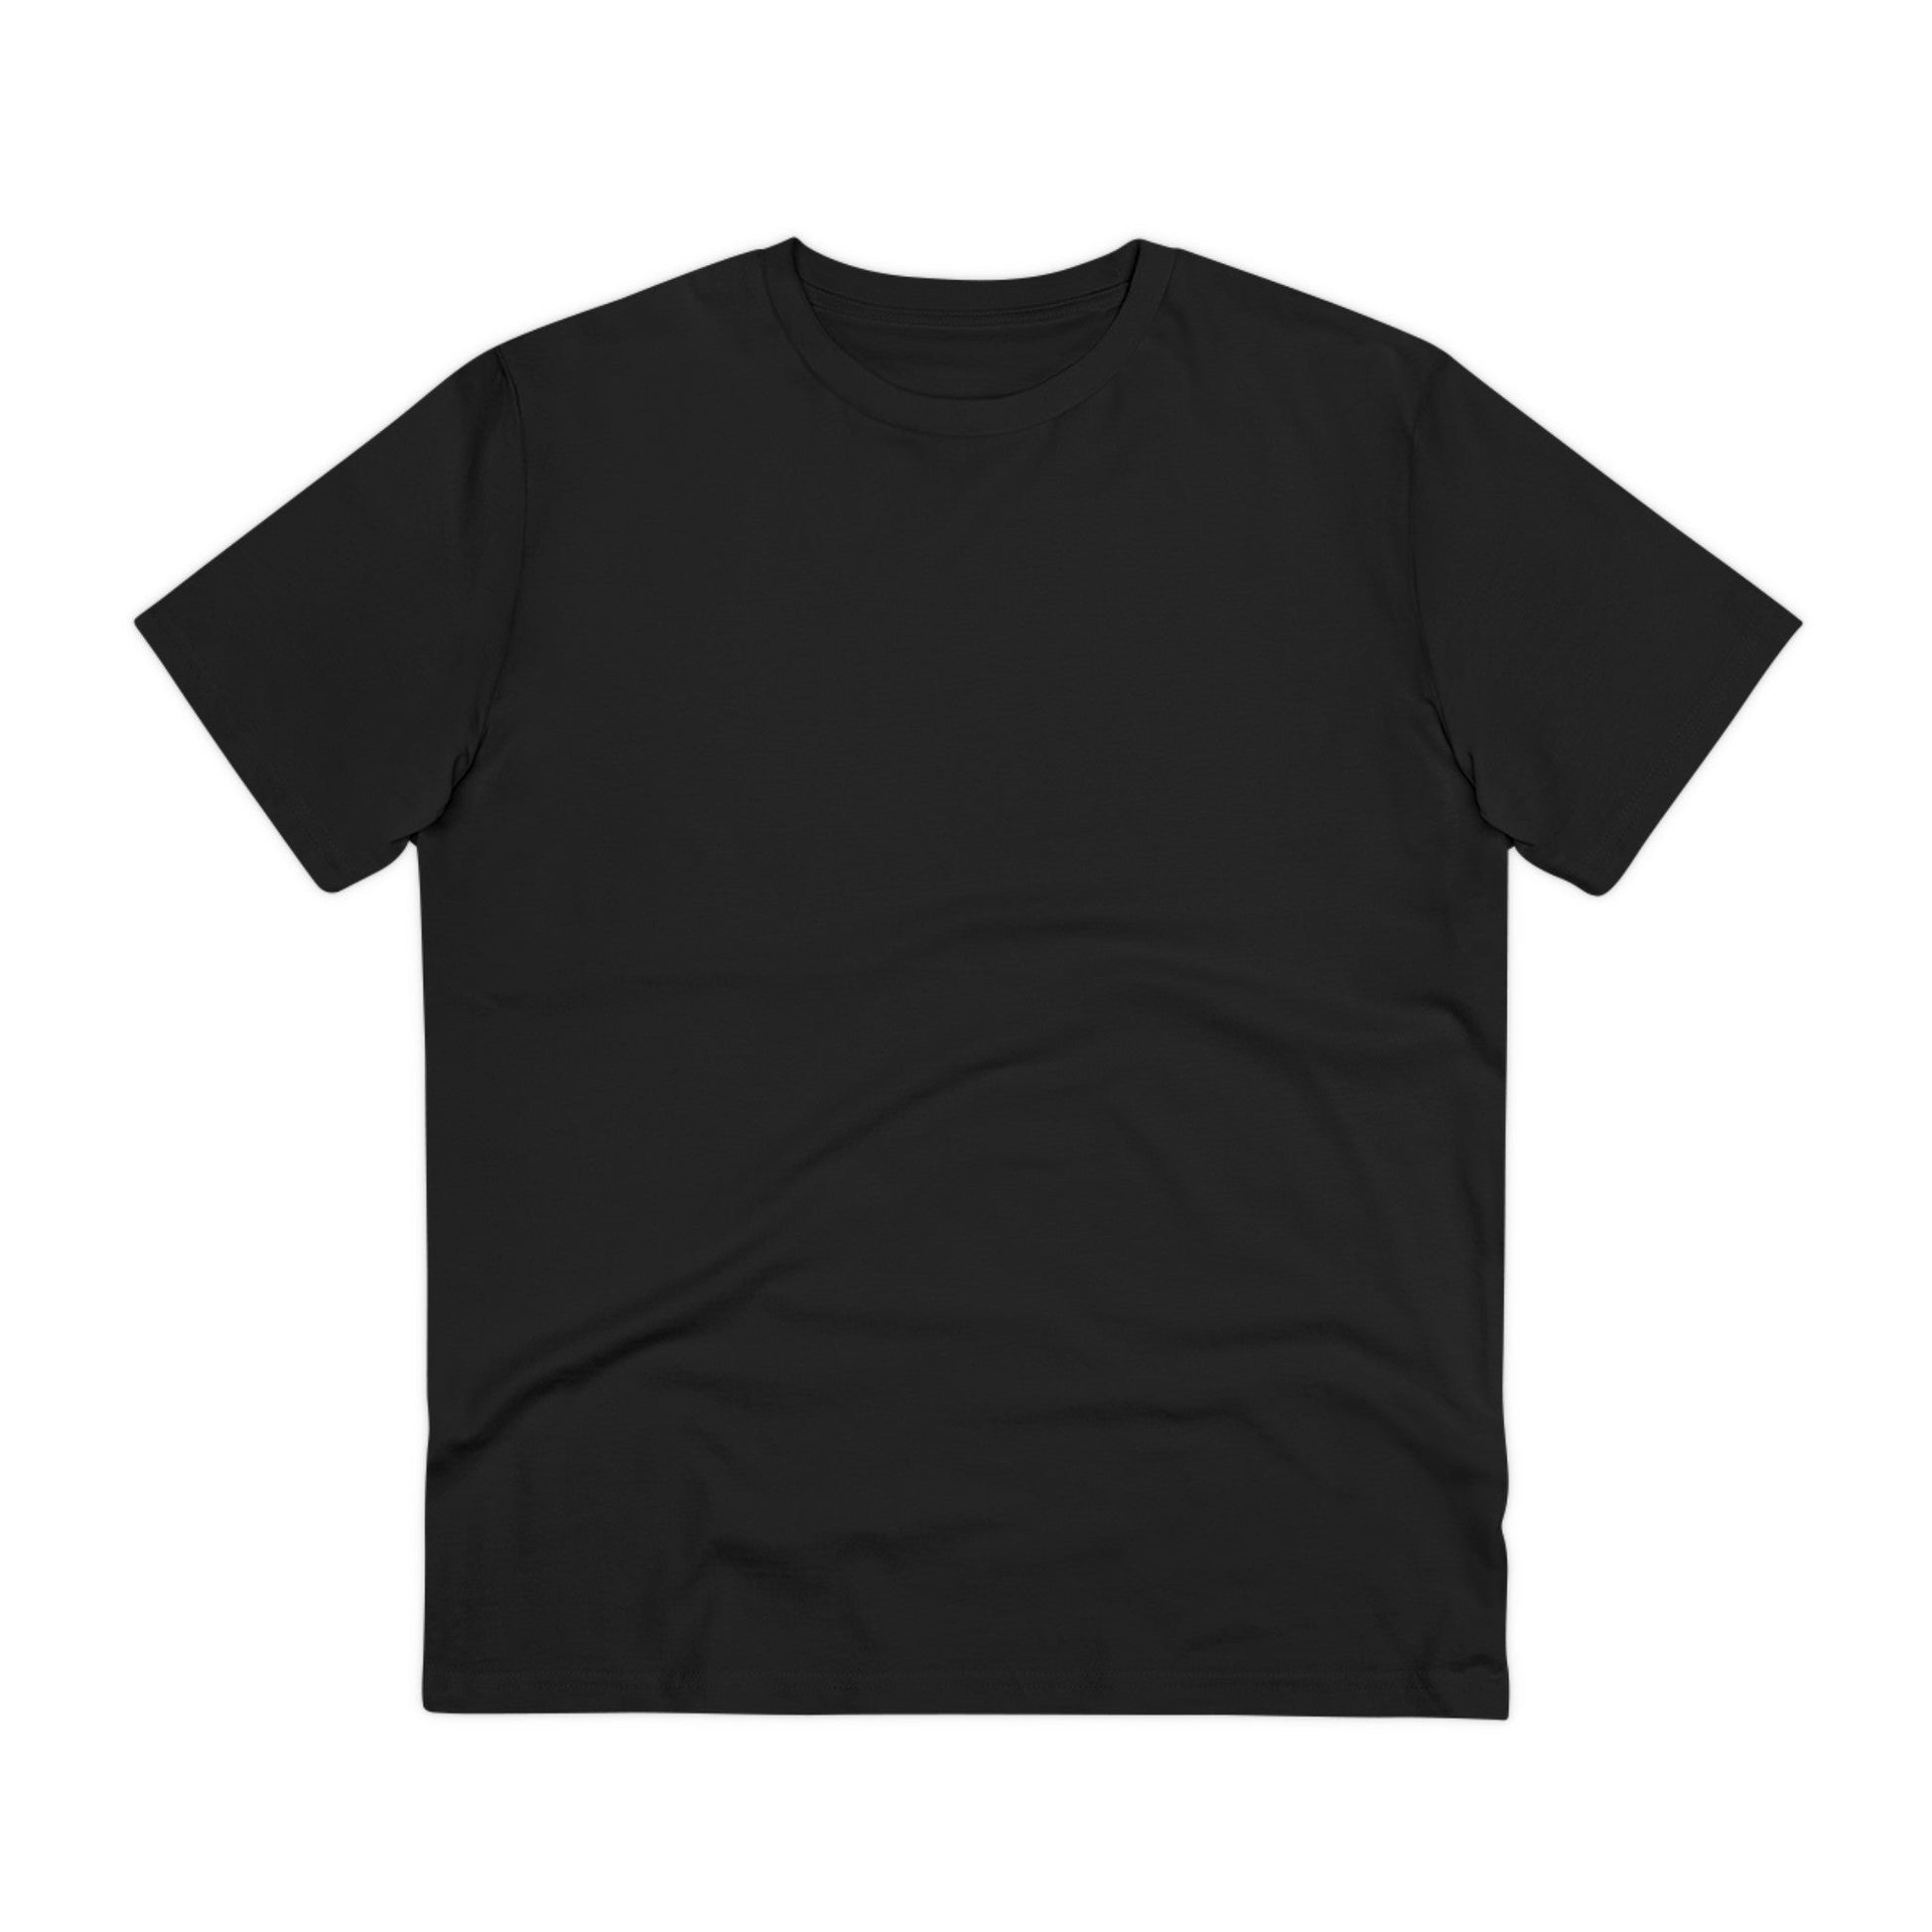 Printify T-Shirt Strong Mad Unicorn - Unicorn World - Back Design